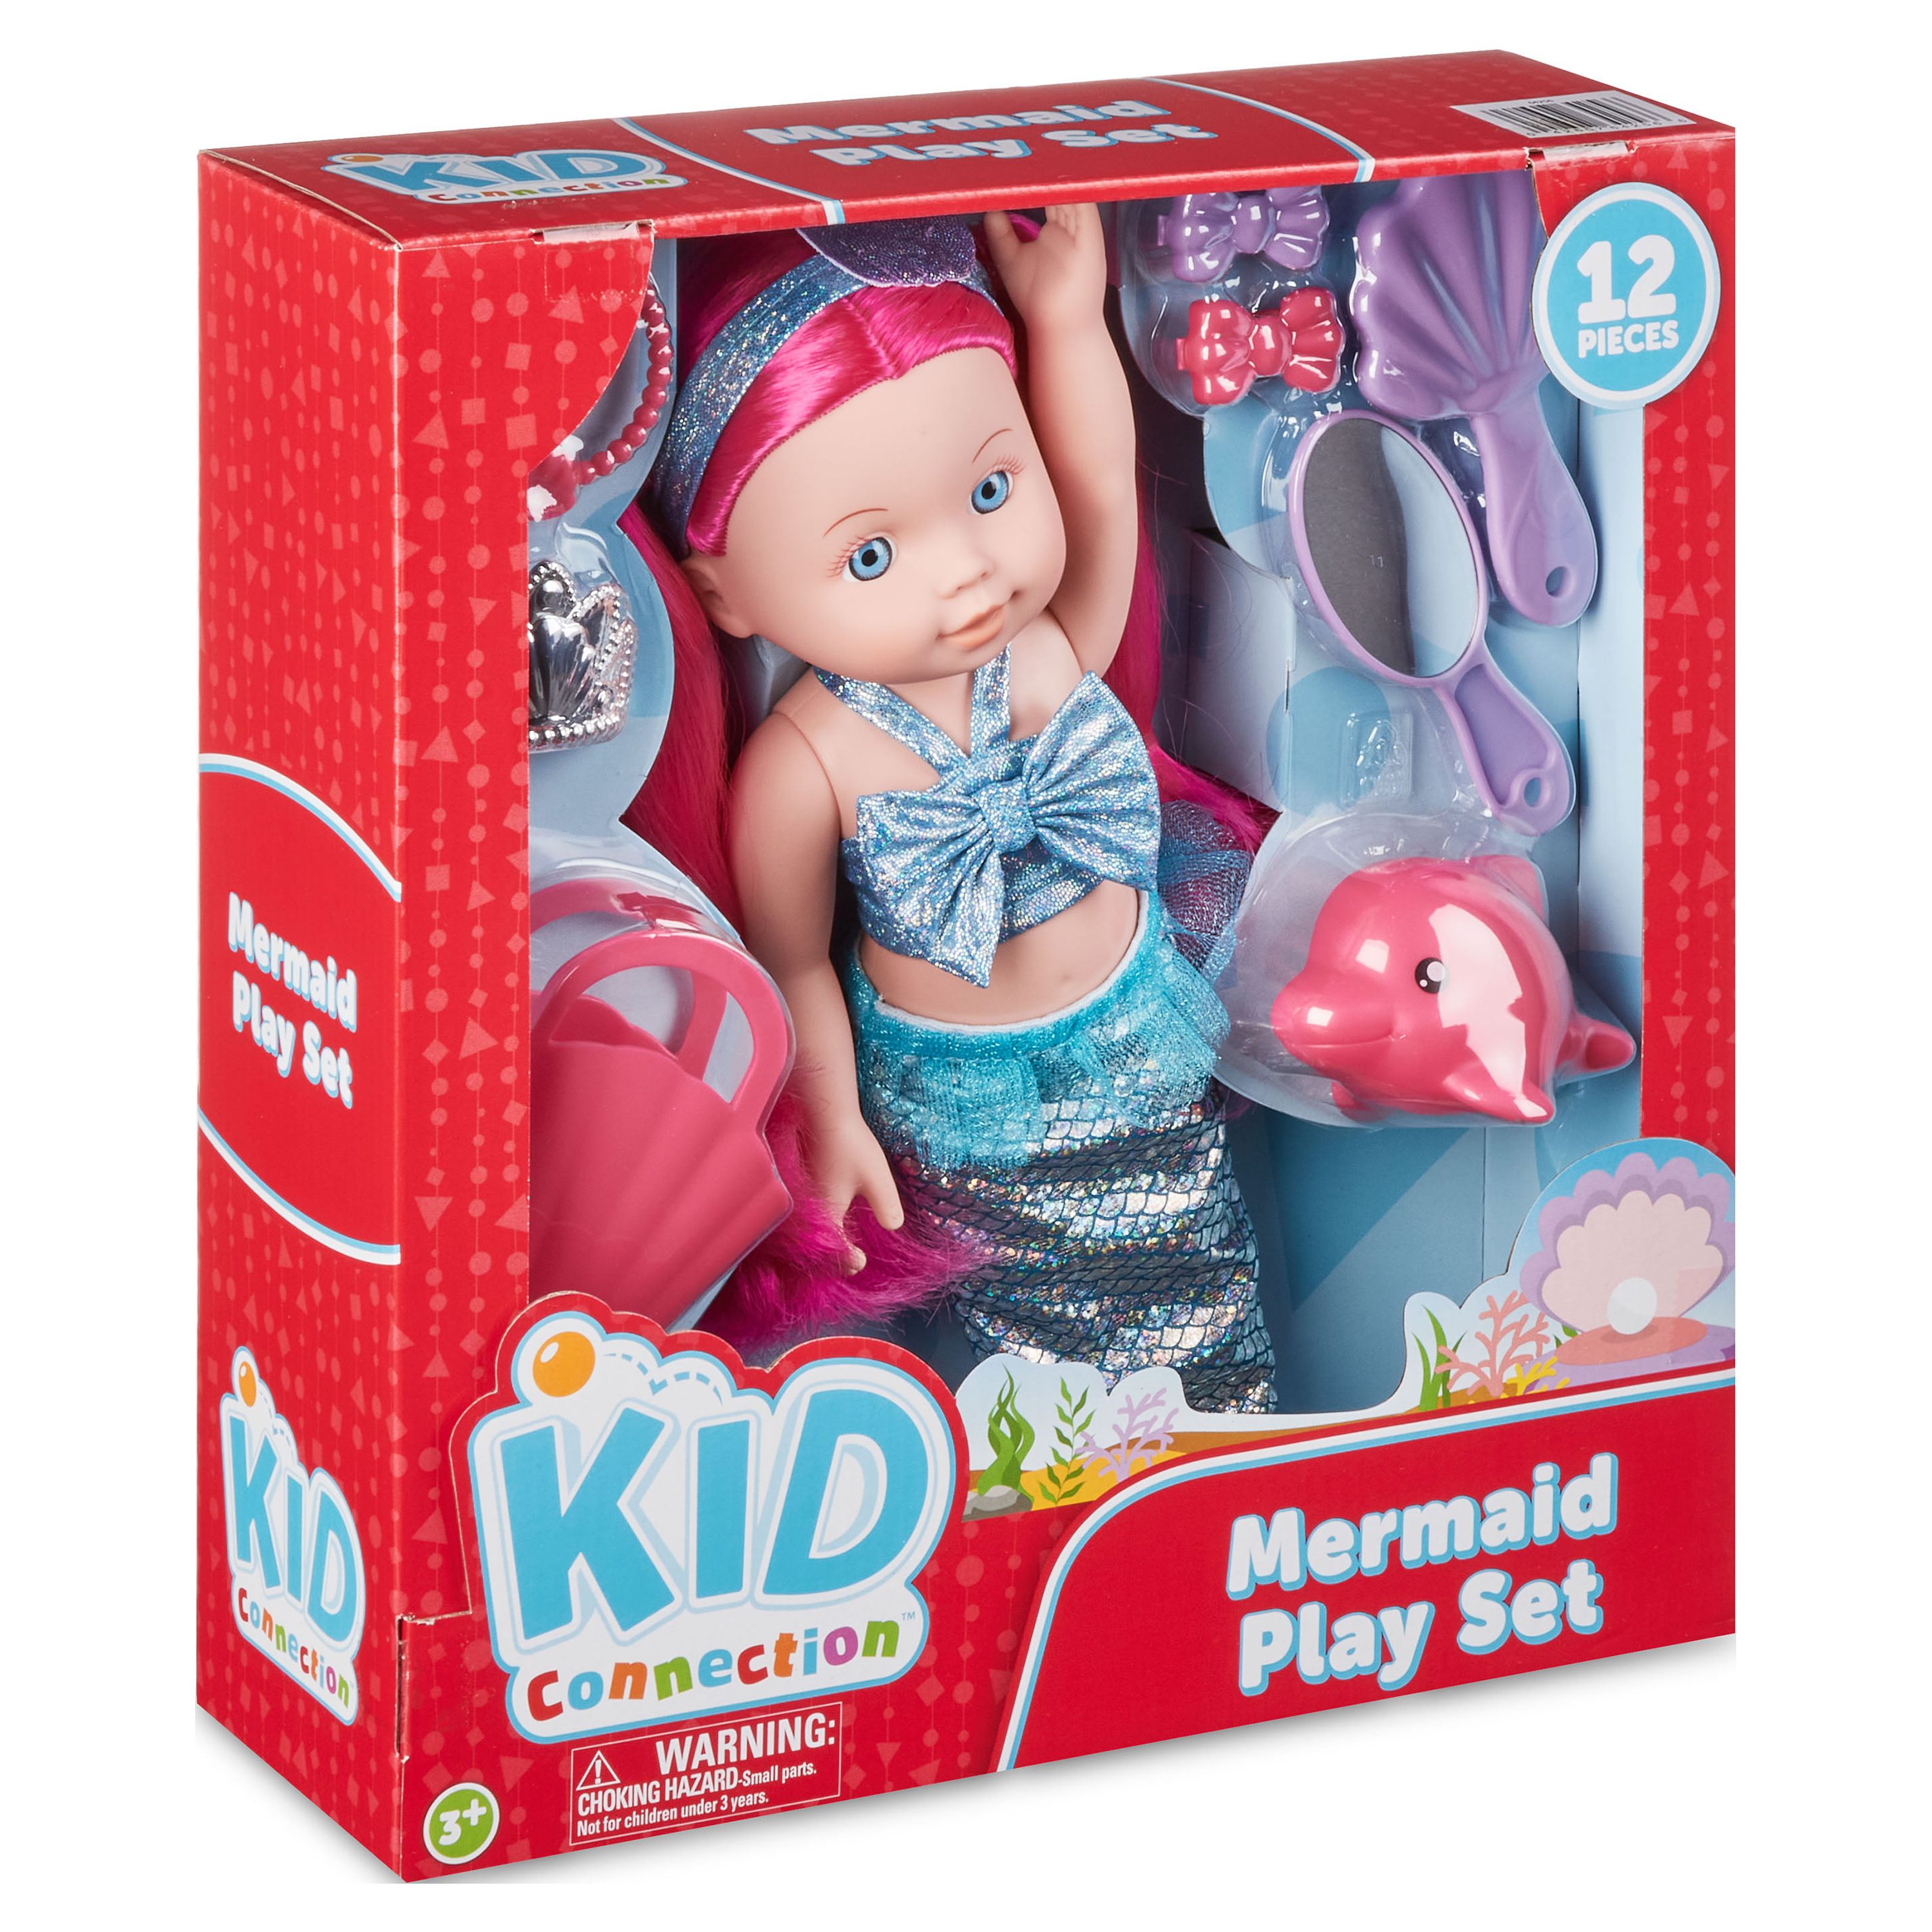 Kid Connection Mermaid Baby Doll Play Set, Blue Eyes, Pink Hair, Light Skin Tone - image 3 of 8